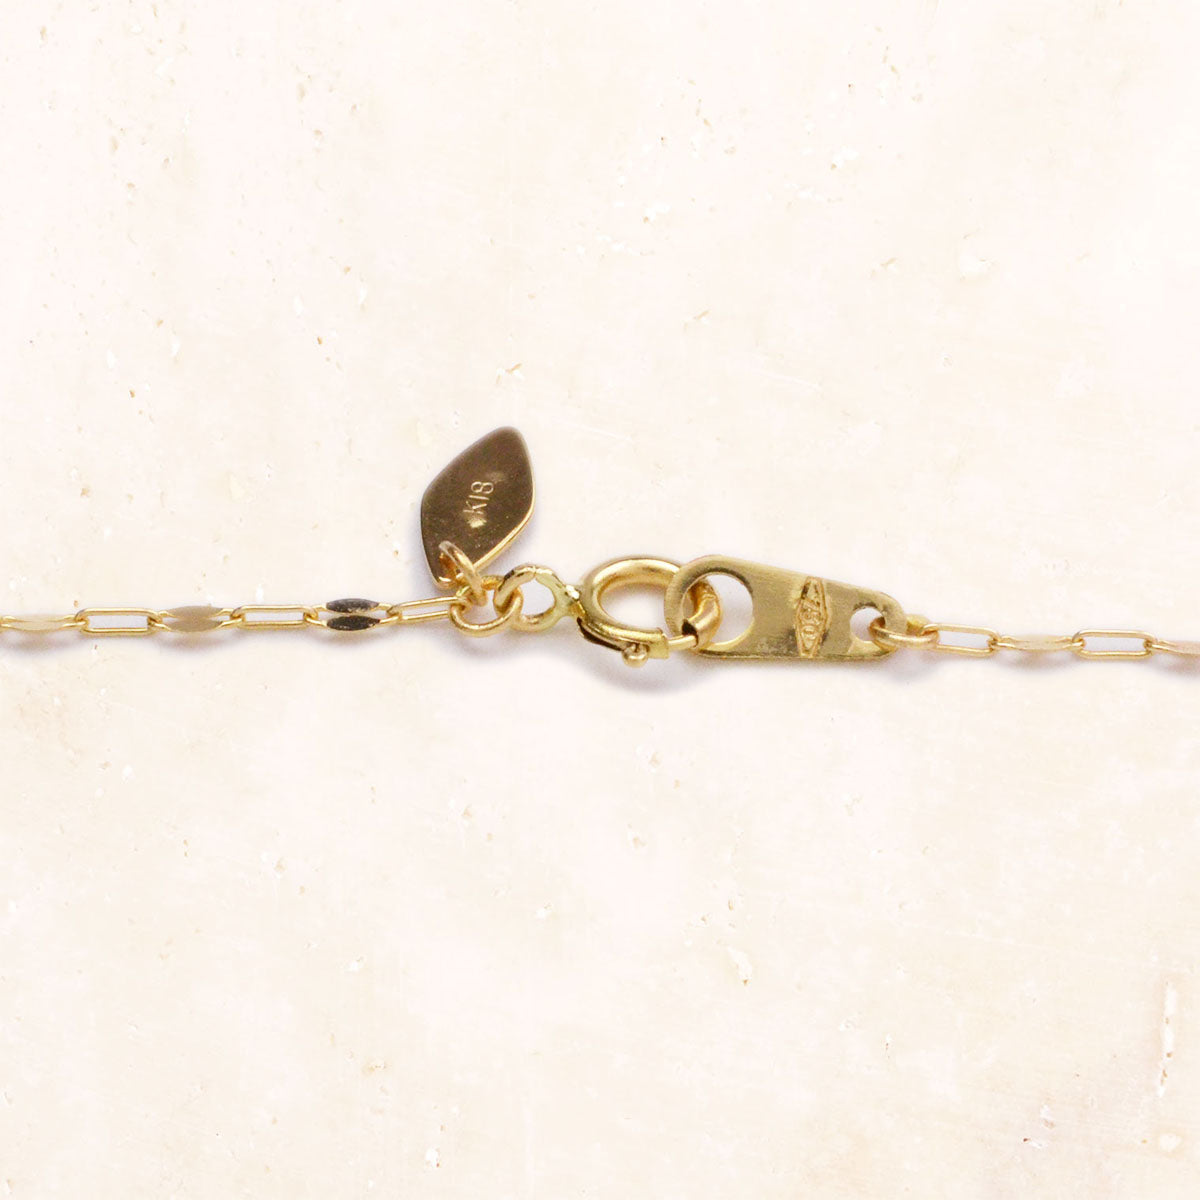 10K Gold Leaf Chain Necklace 50cm